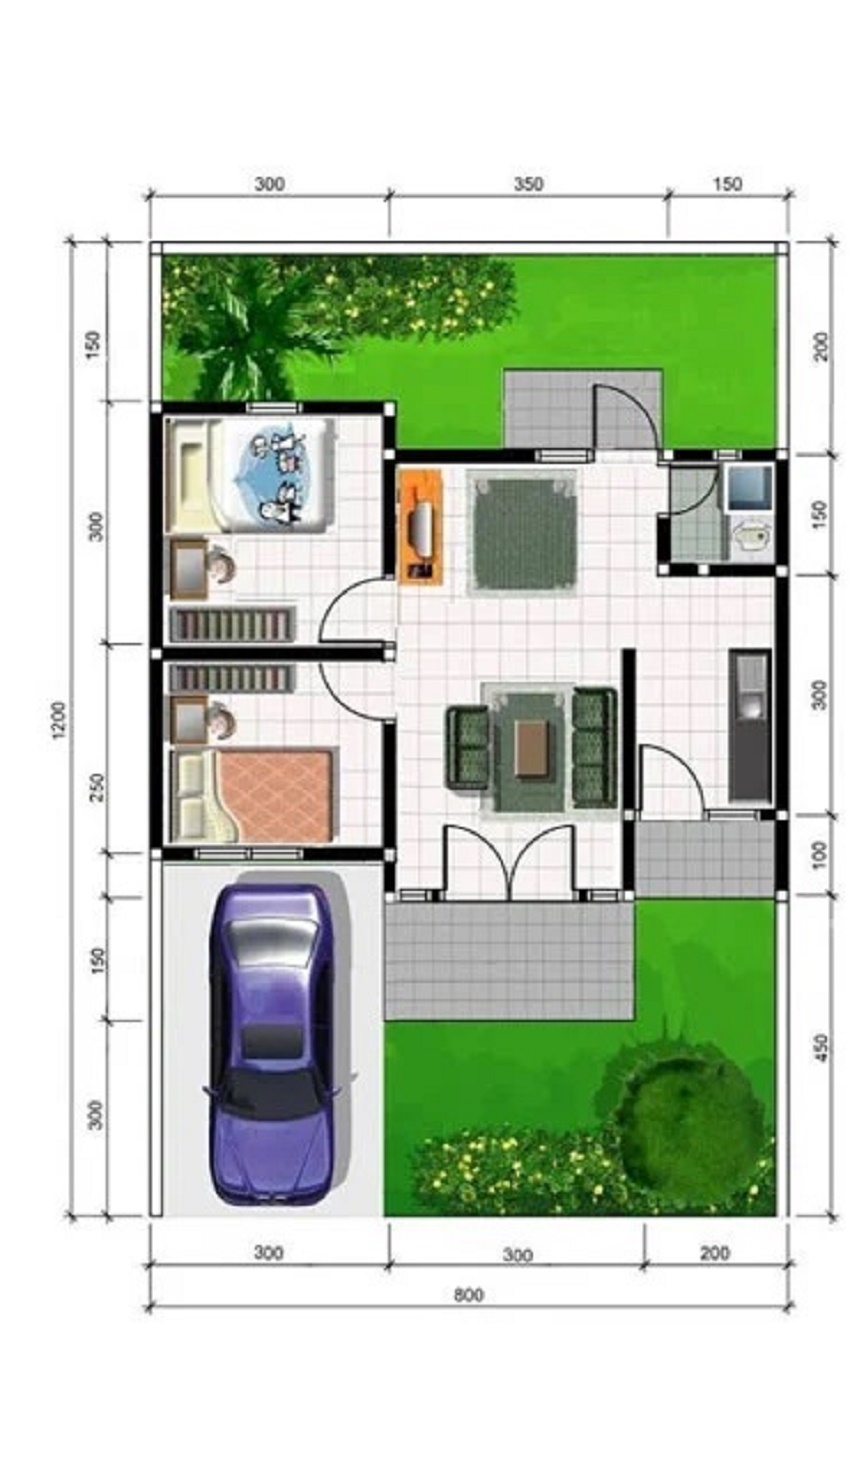 Kumpulan Gambar Denah Rumah Type 36 1 & 2 Lantai Plus Garasi - Swara Riau | Bridge The World - Denah Rumah Type 36 1 Lantai